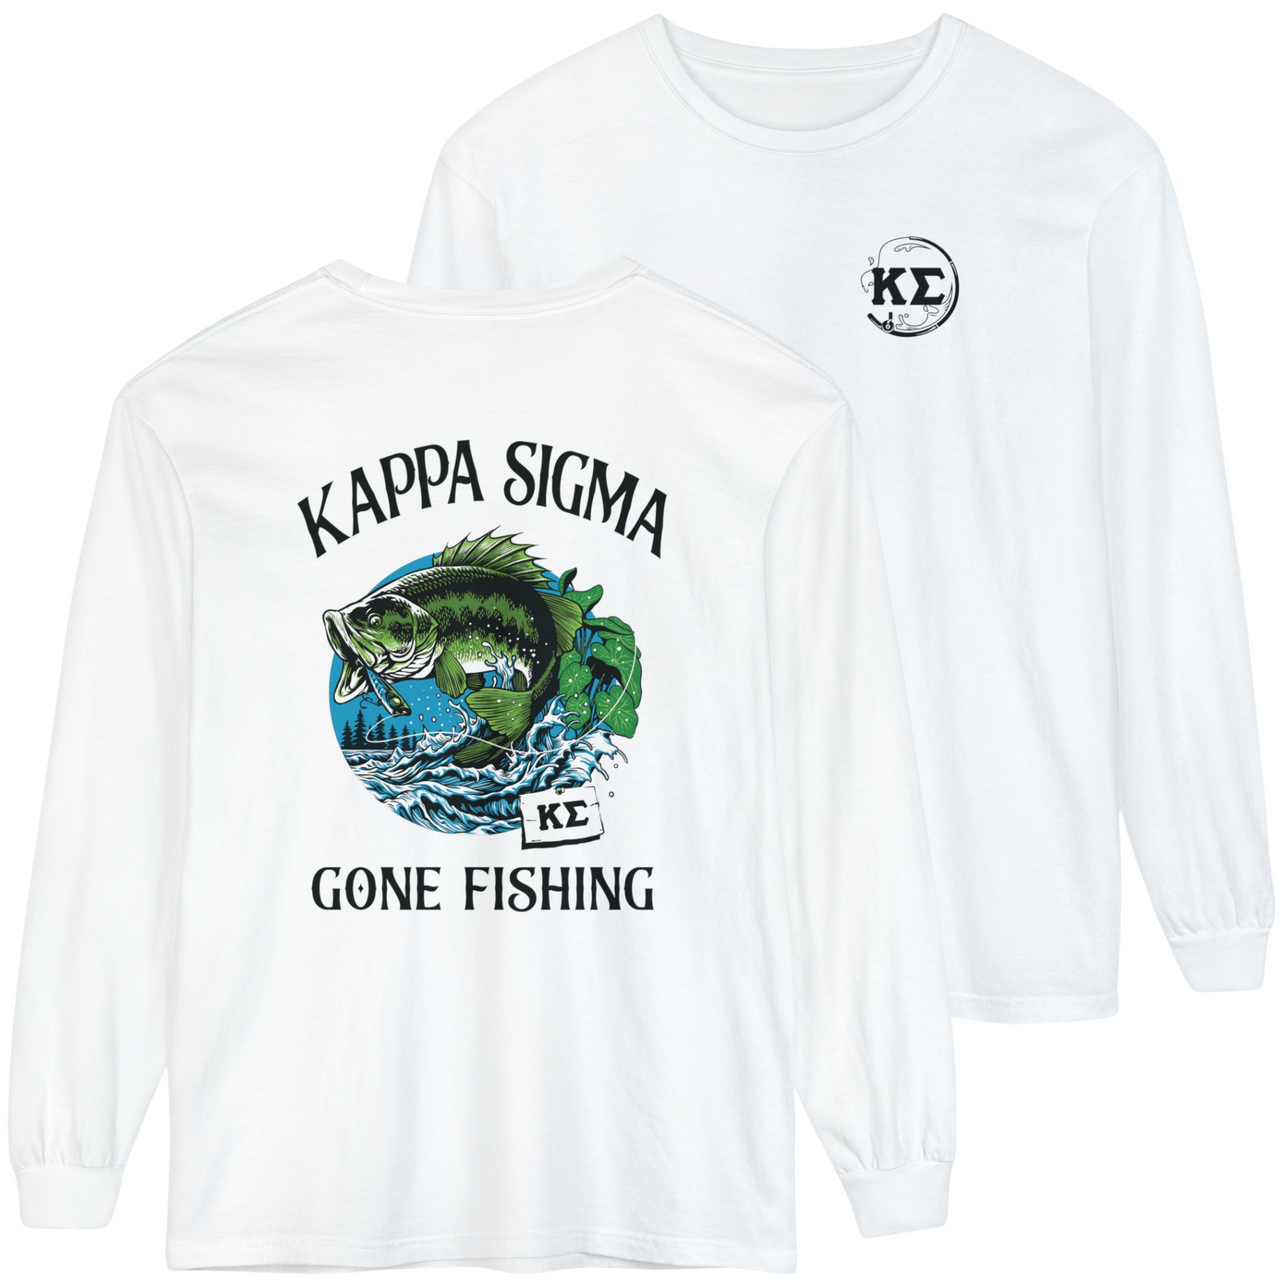 Kappa Sigma Graphic Long Sleeve | Gone Fishing